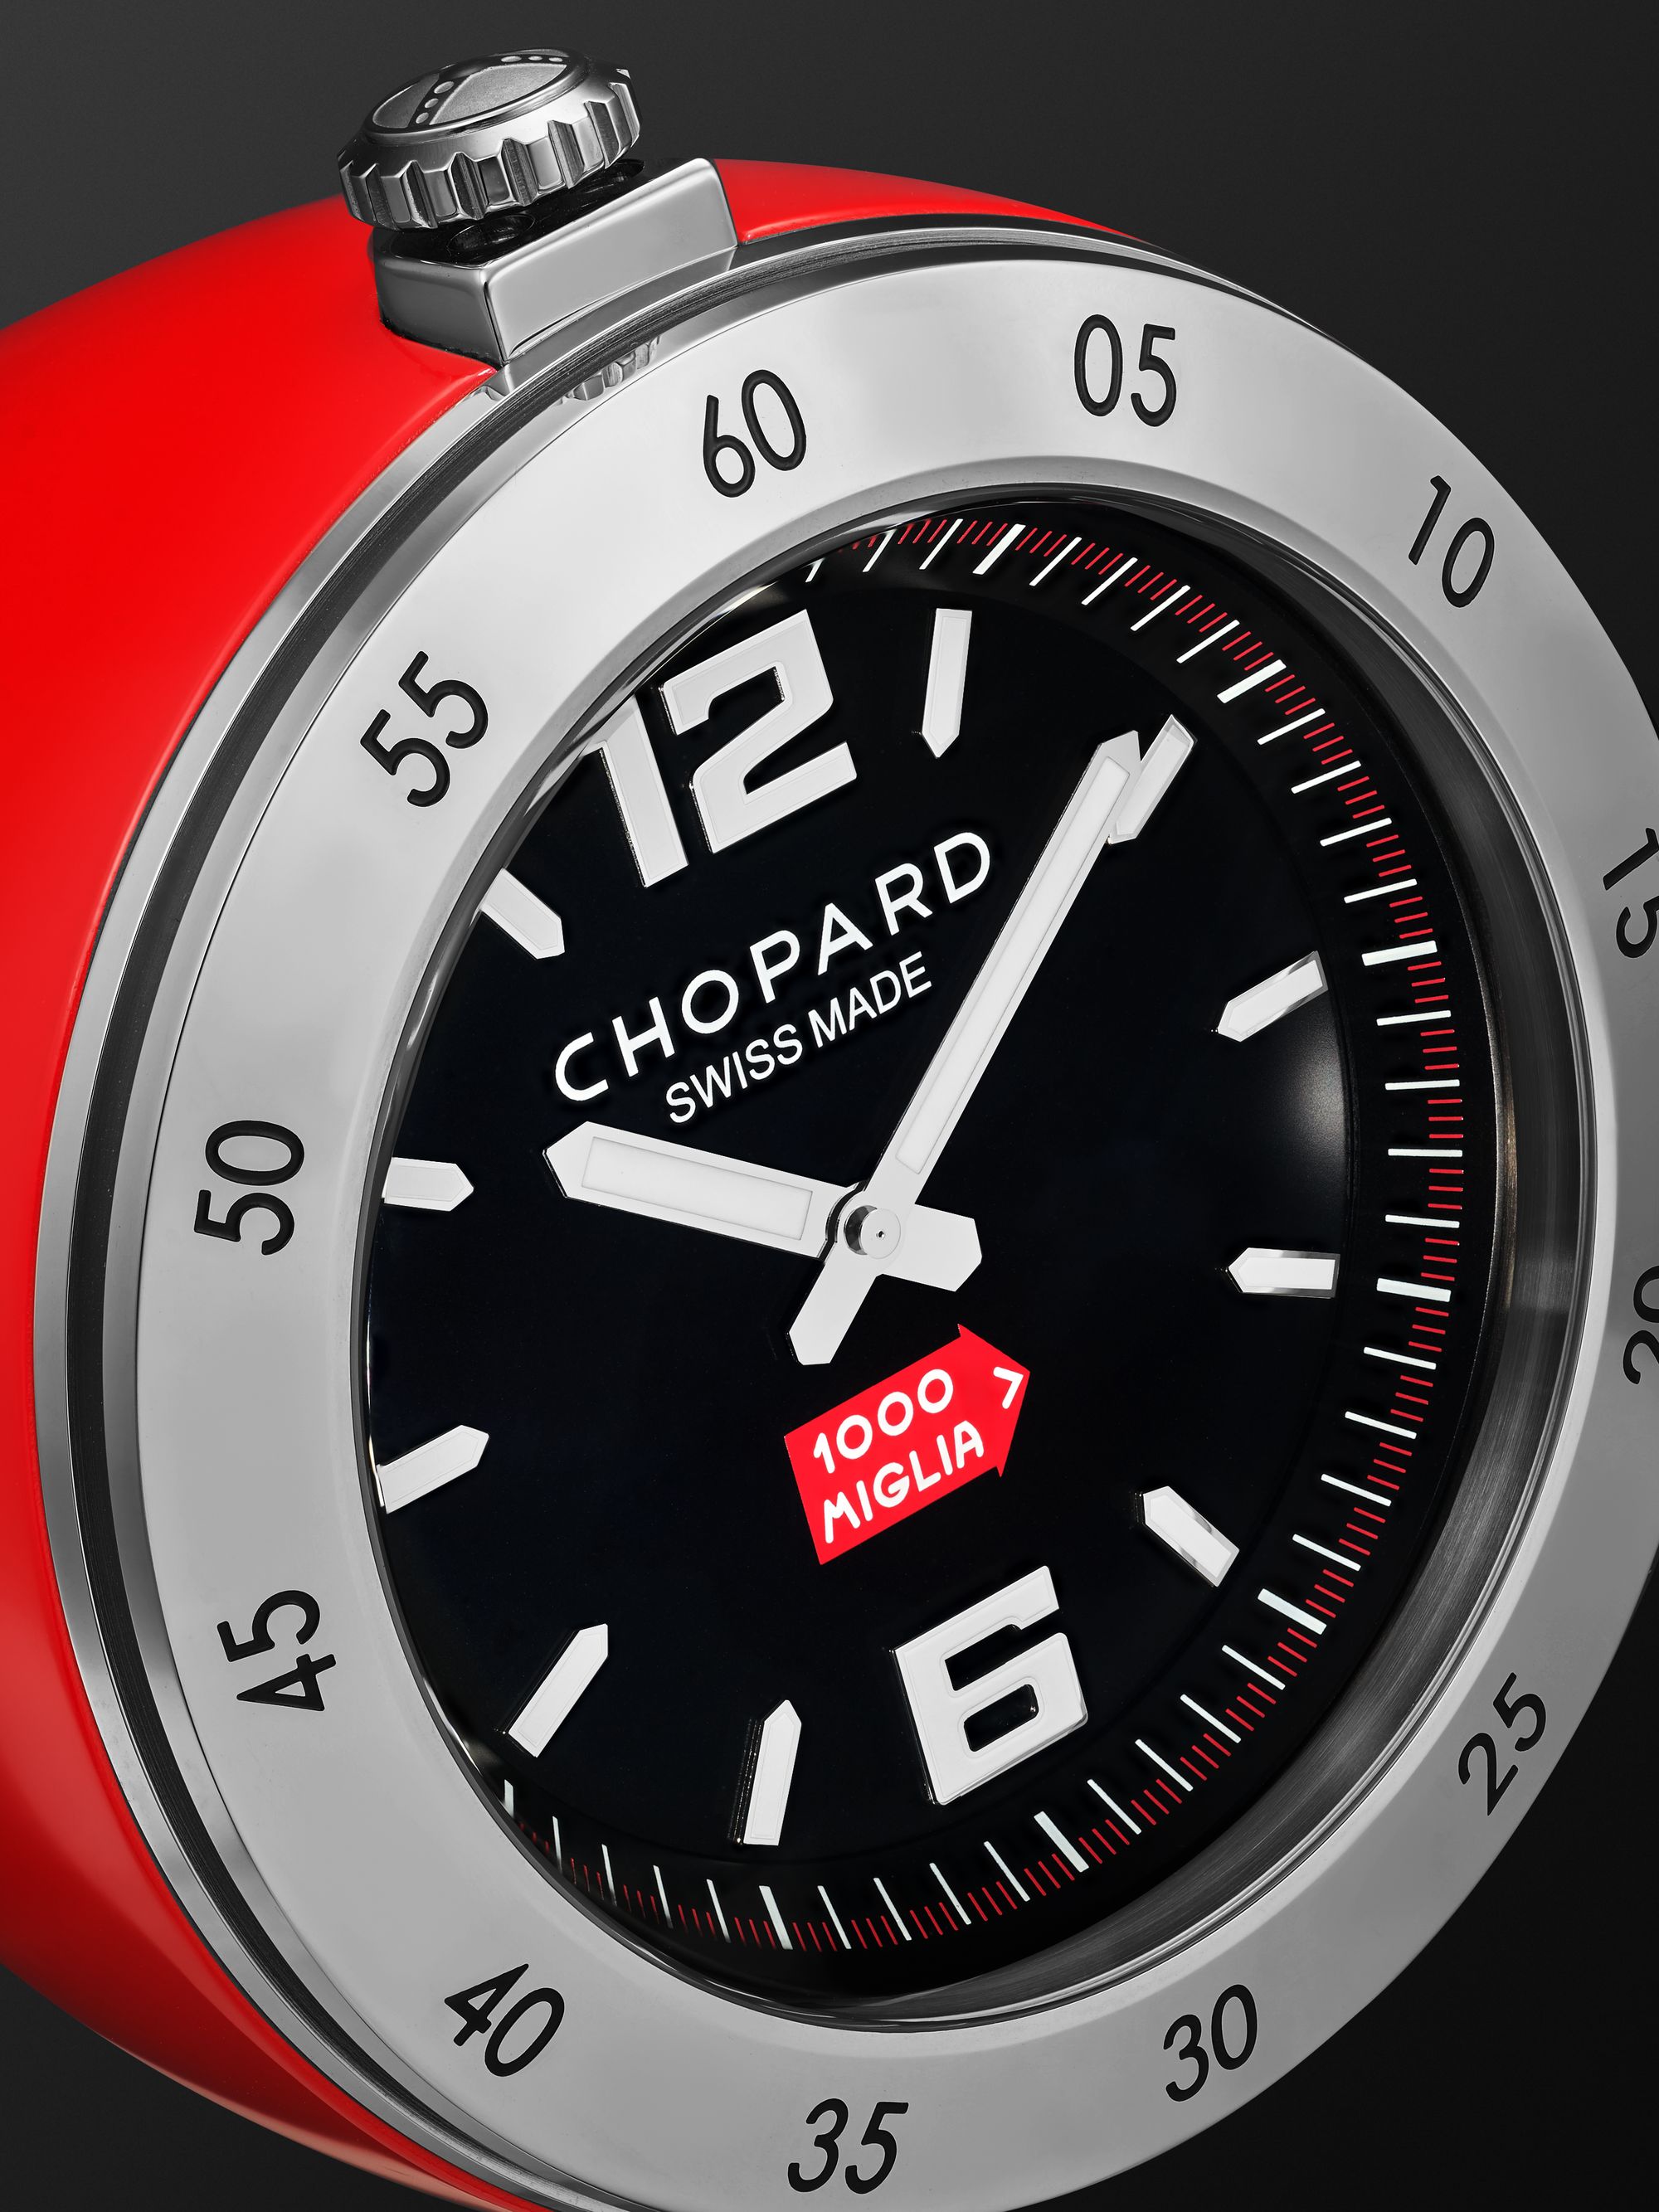 CHOPARD Vintage Racing Stainless Steel Table Clock, Ref. No. 95020-0095